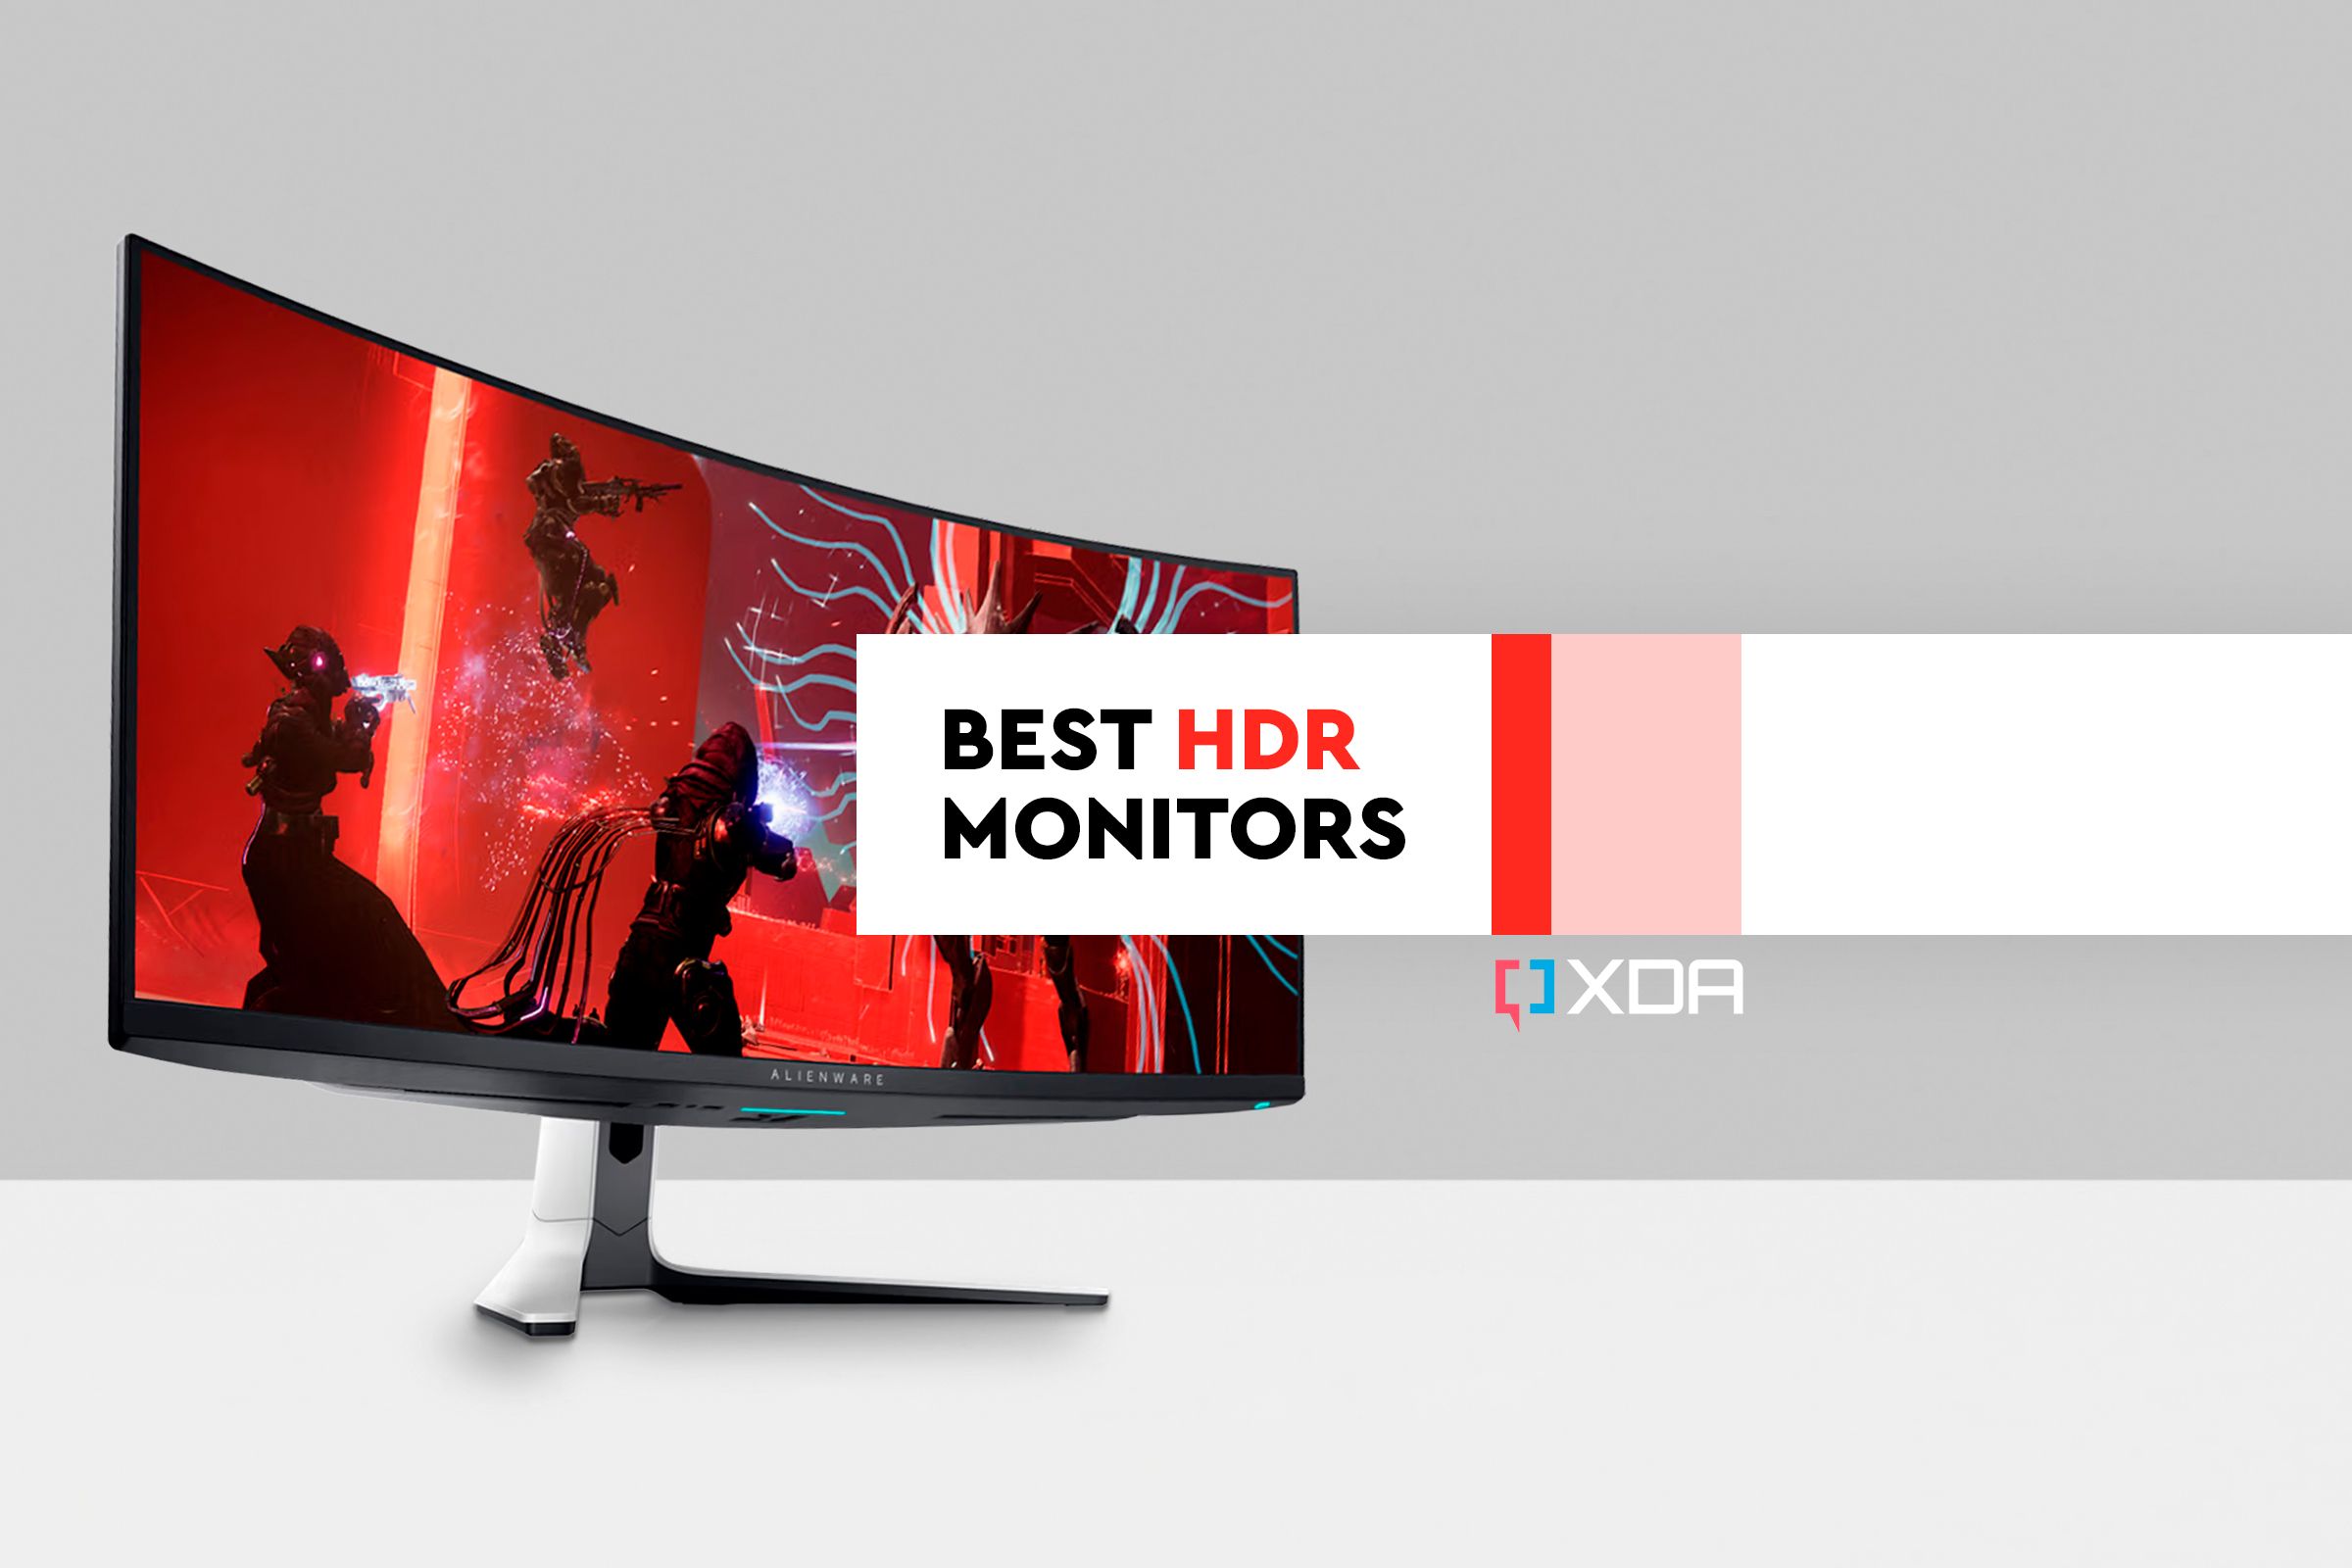 Best HDR monitors